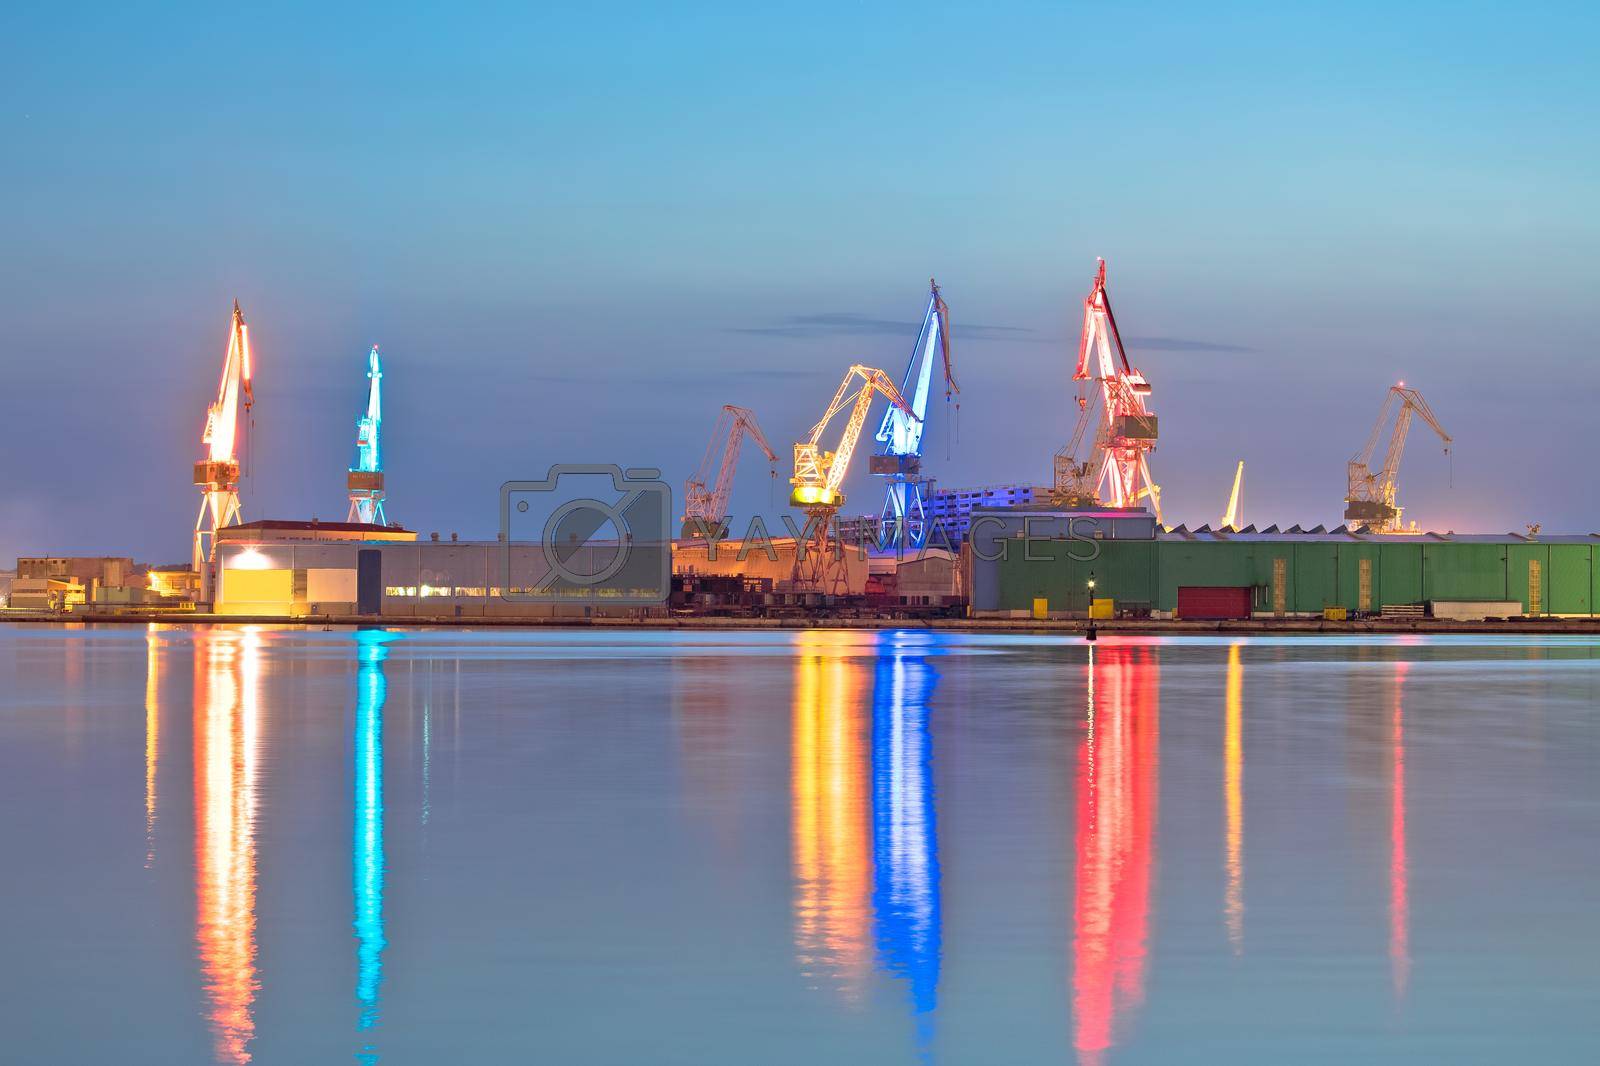 Royalty free image of City of Pula shipyard illuminated cranes evening view by xbrchx